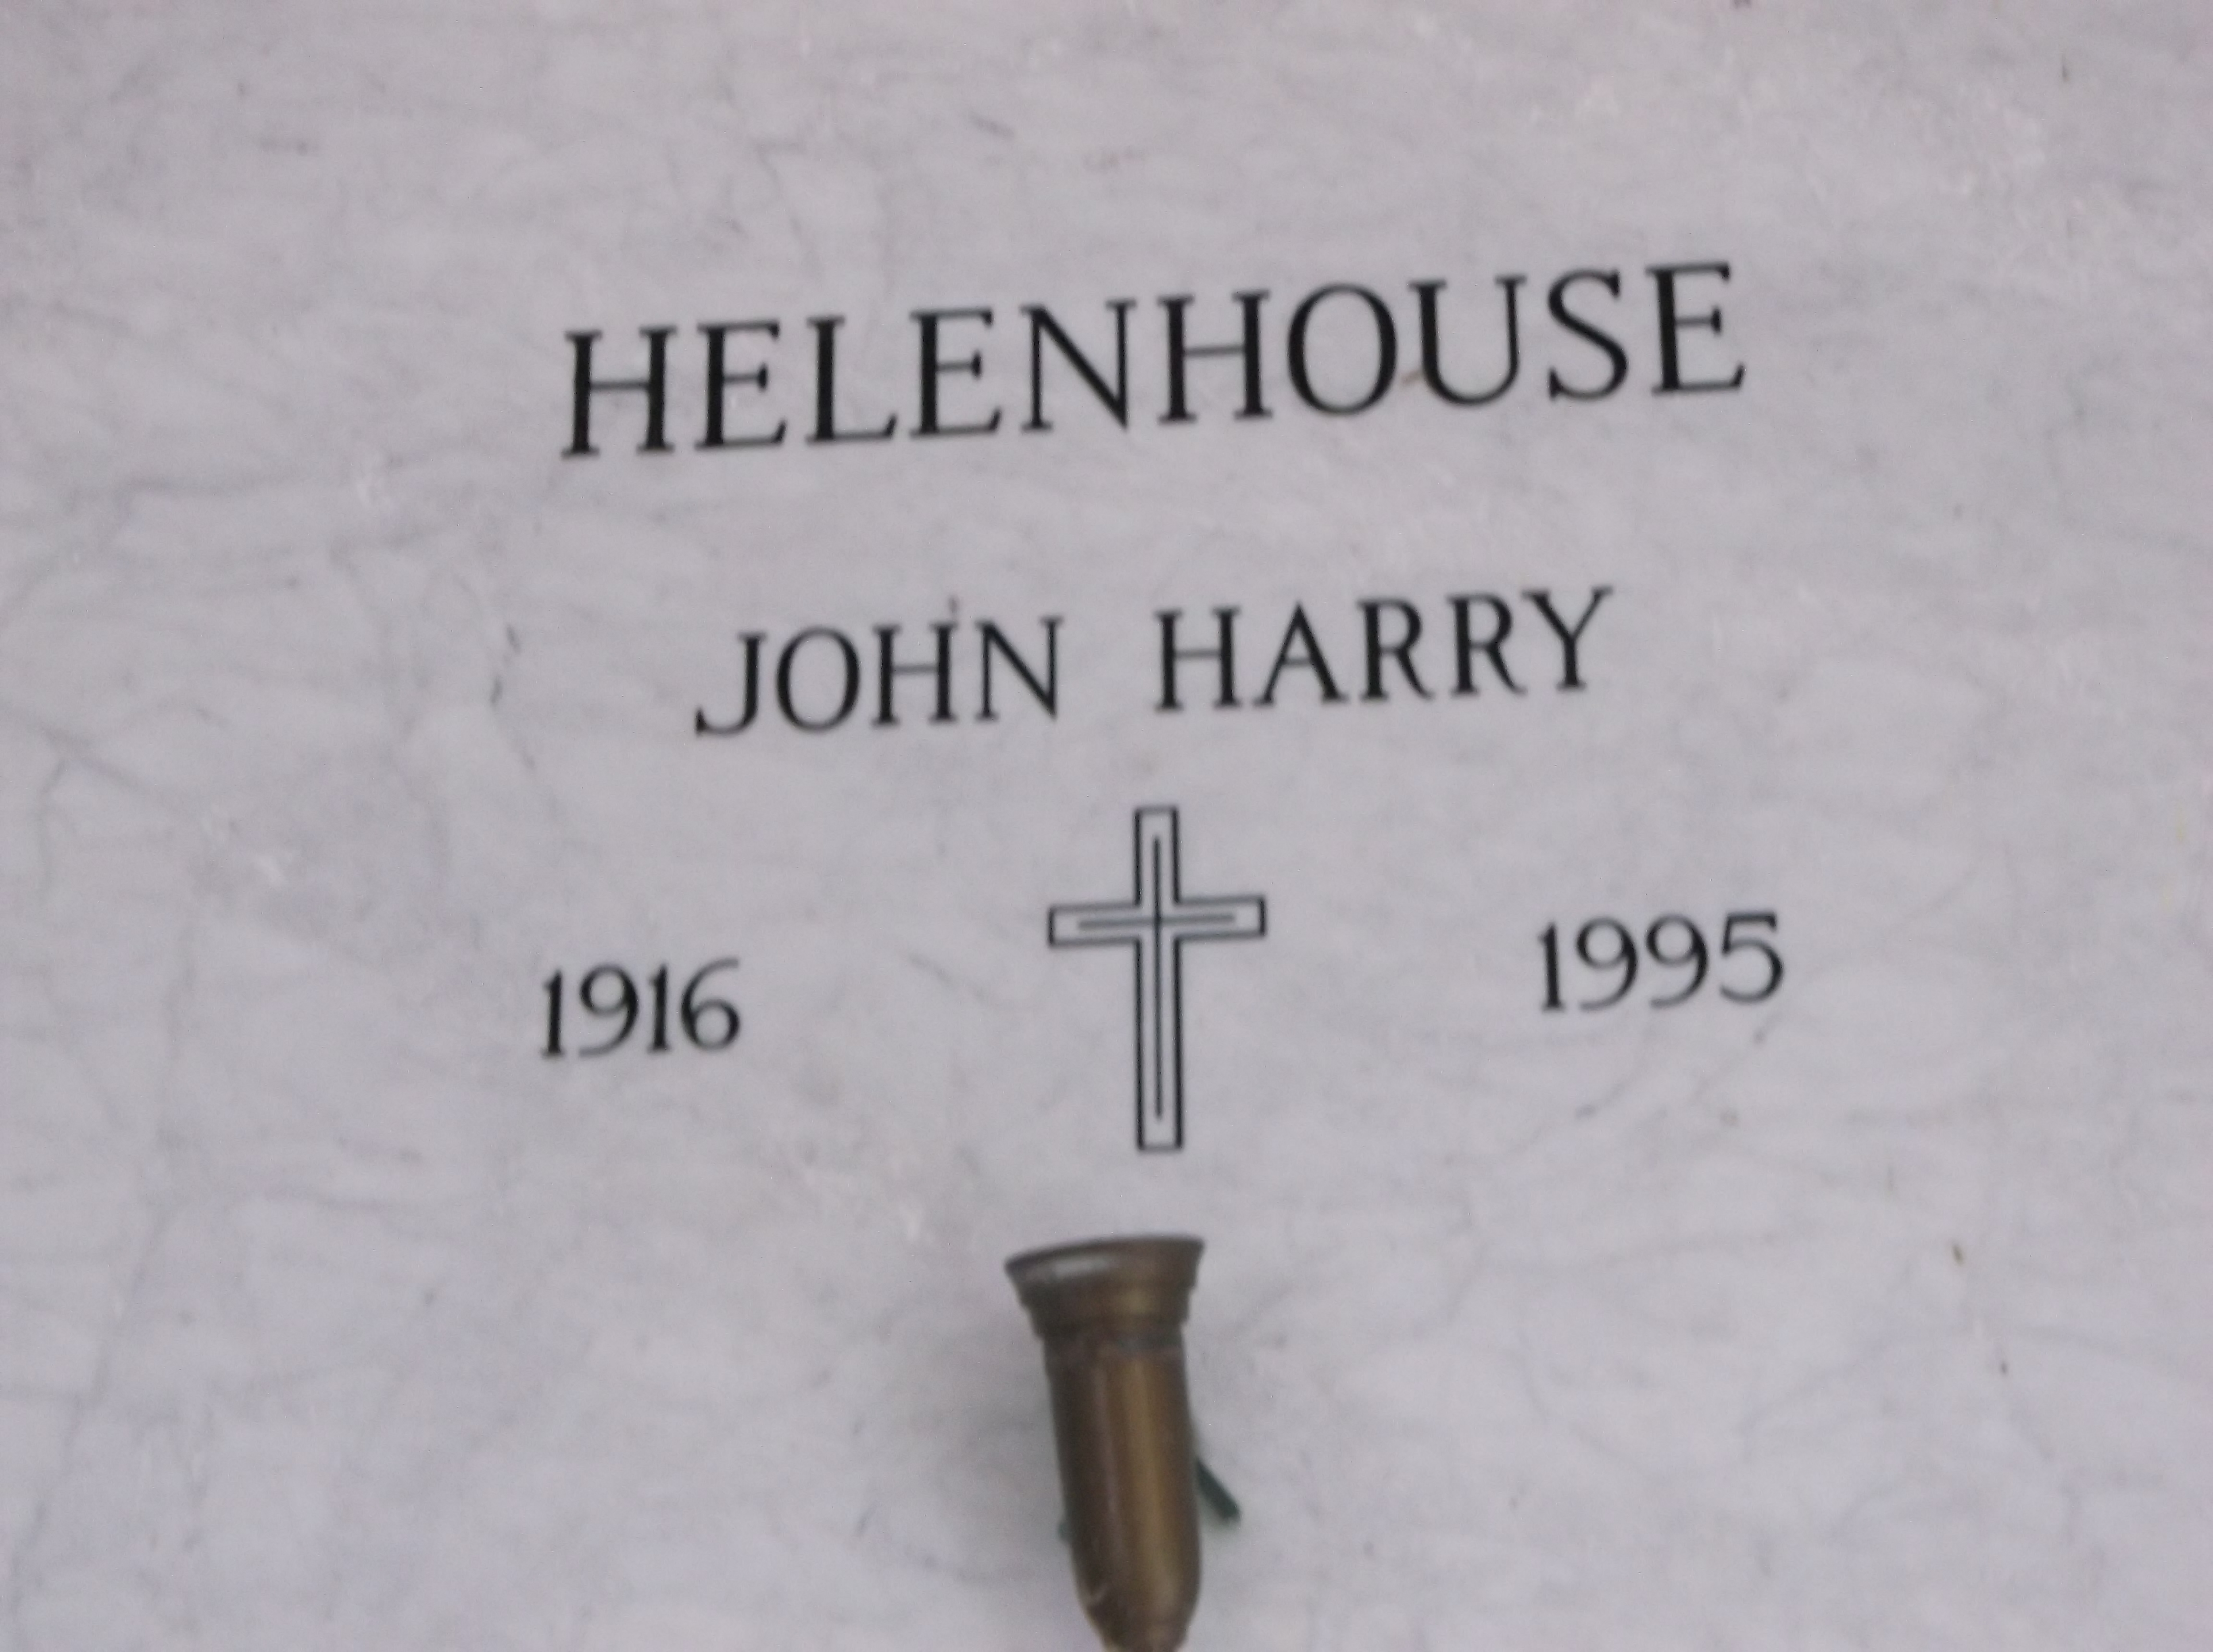 John Harry Helenhouse